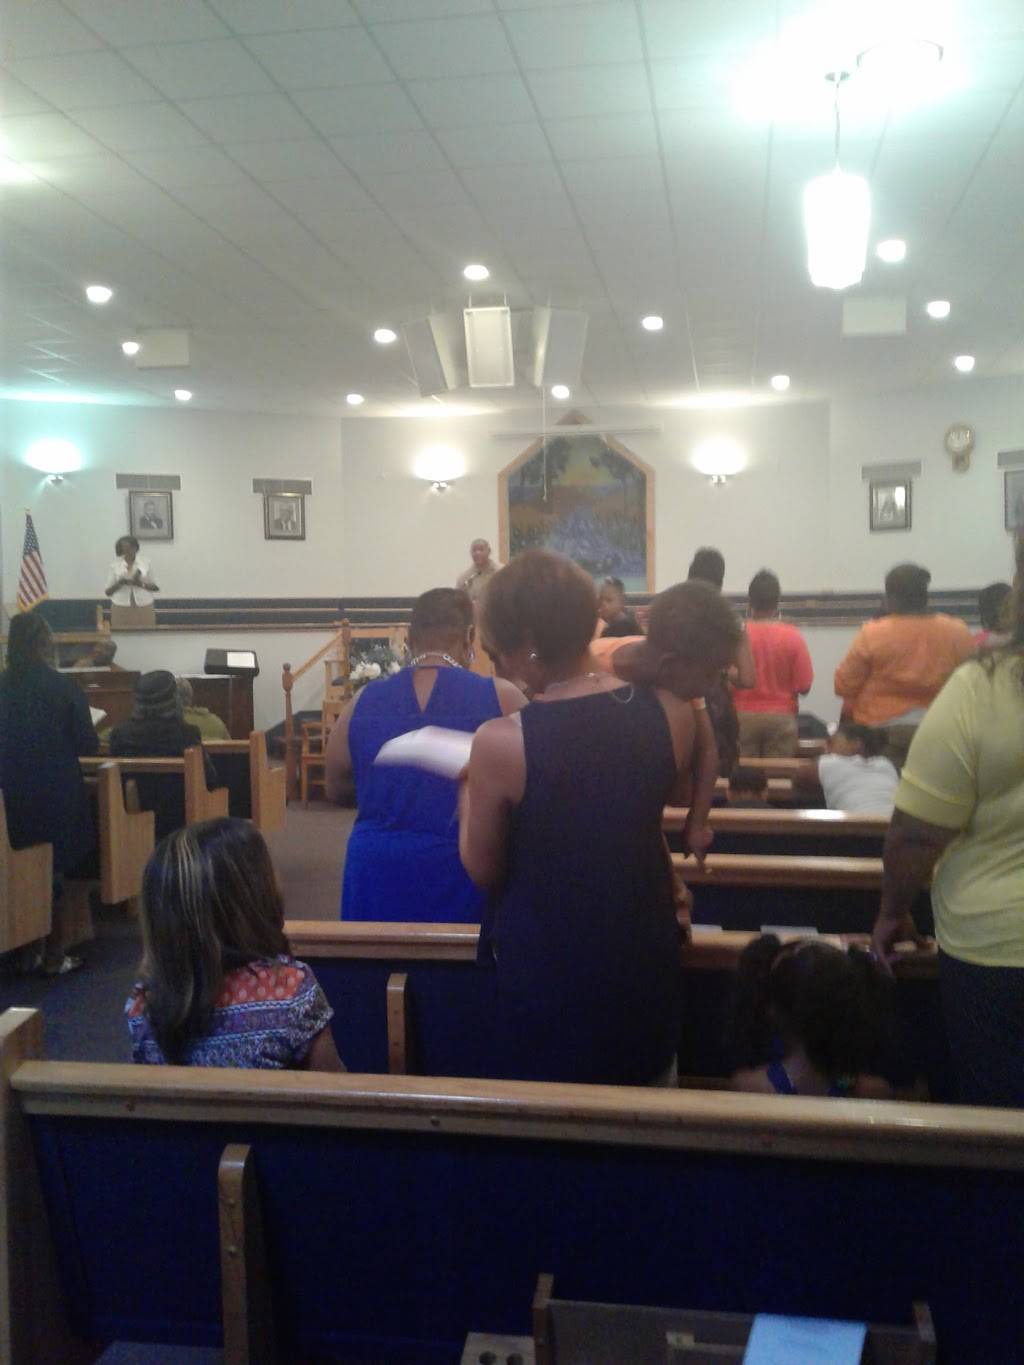 Ephesian Primitive Baptist Church | Nashville, TN 37208, USA | Phone: (615) 320-0621